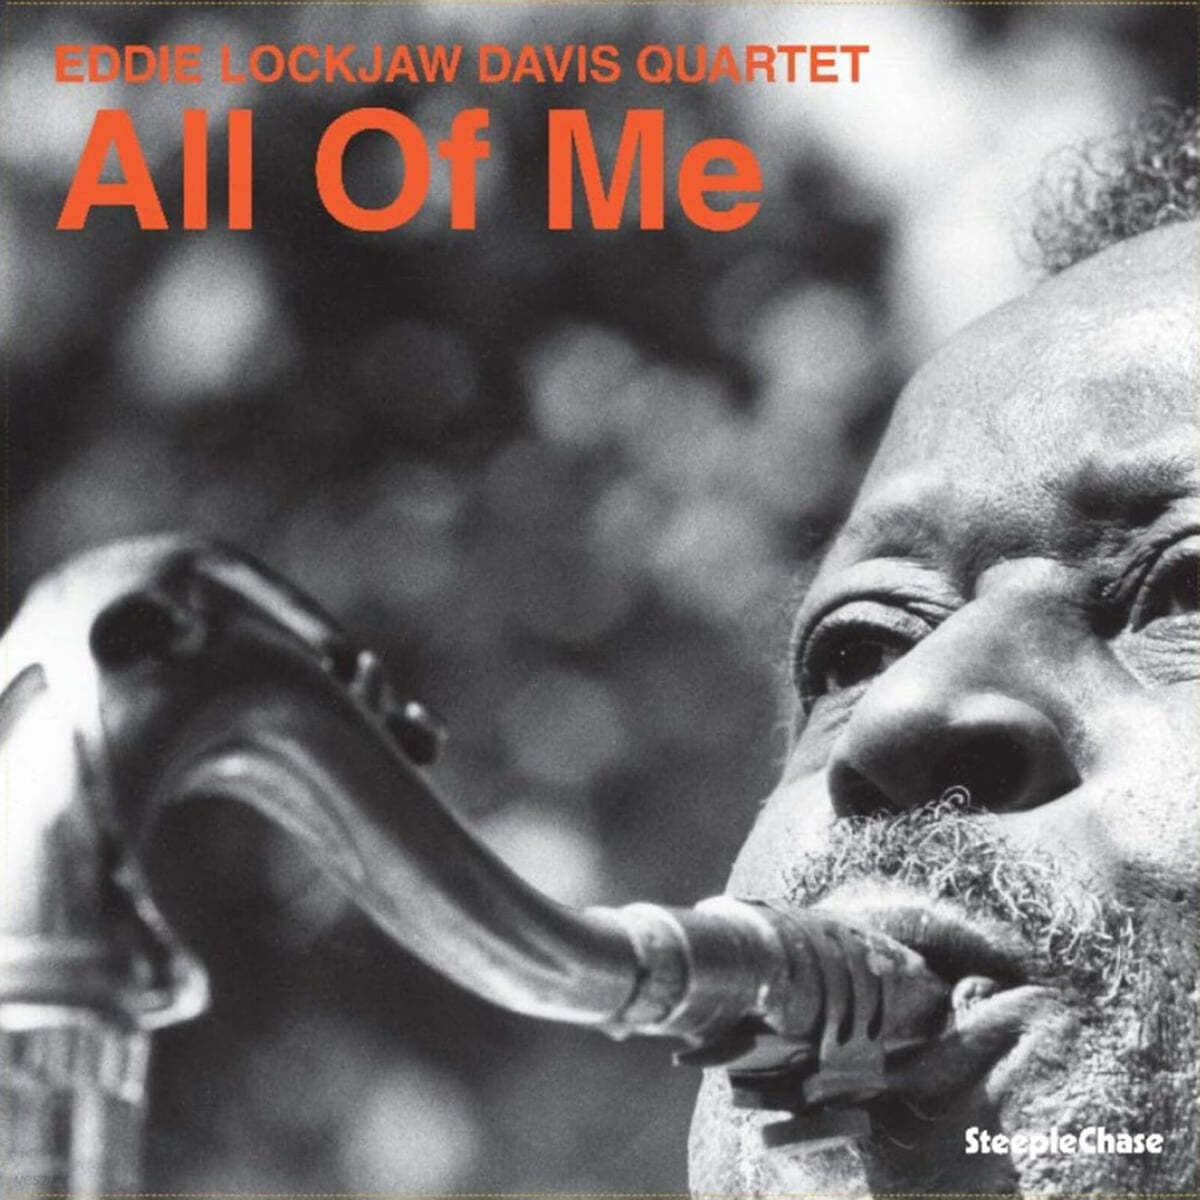 Eddie Lockjaw Davis Quartet (에디 락조 데이비스 쿼텟) - All of Me [LP]